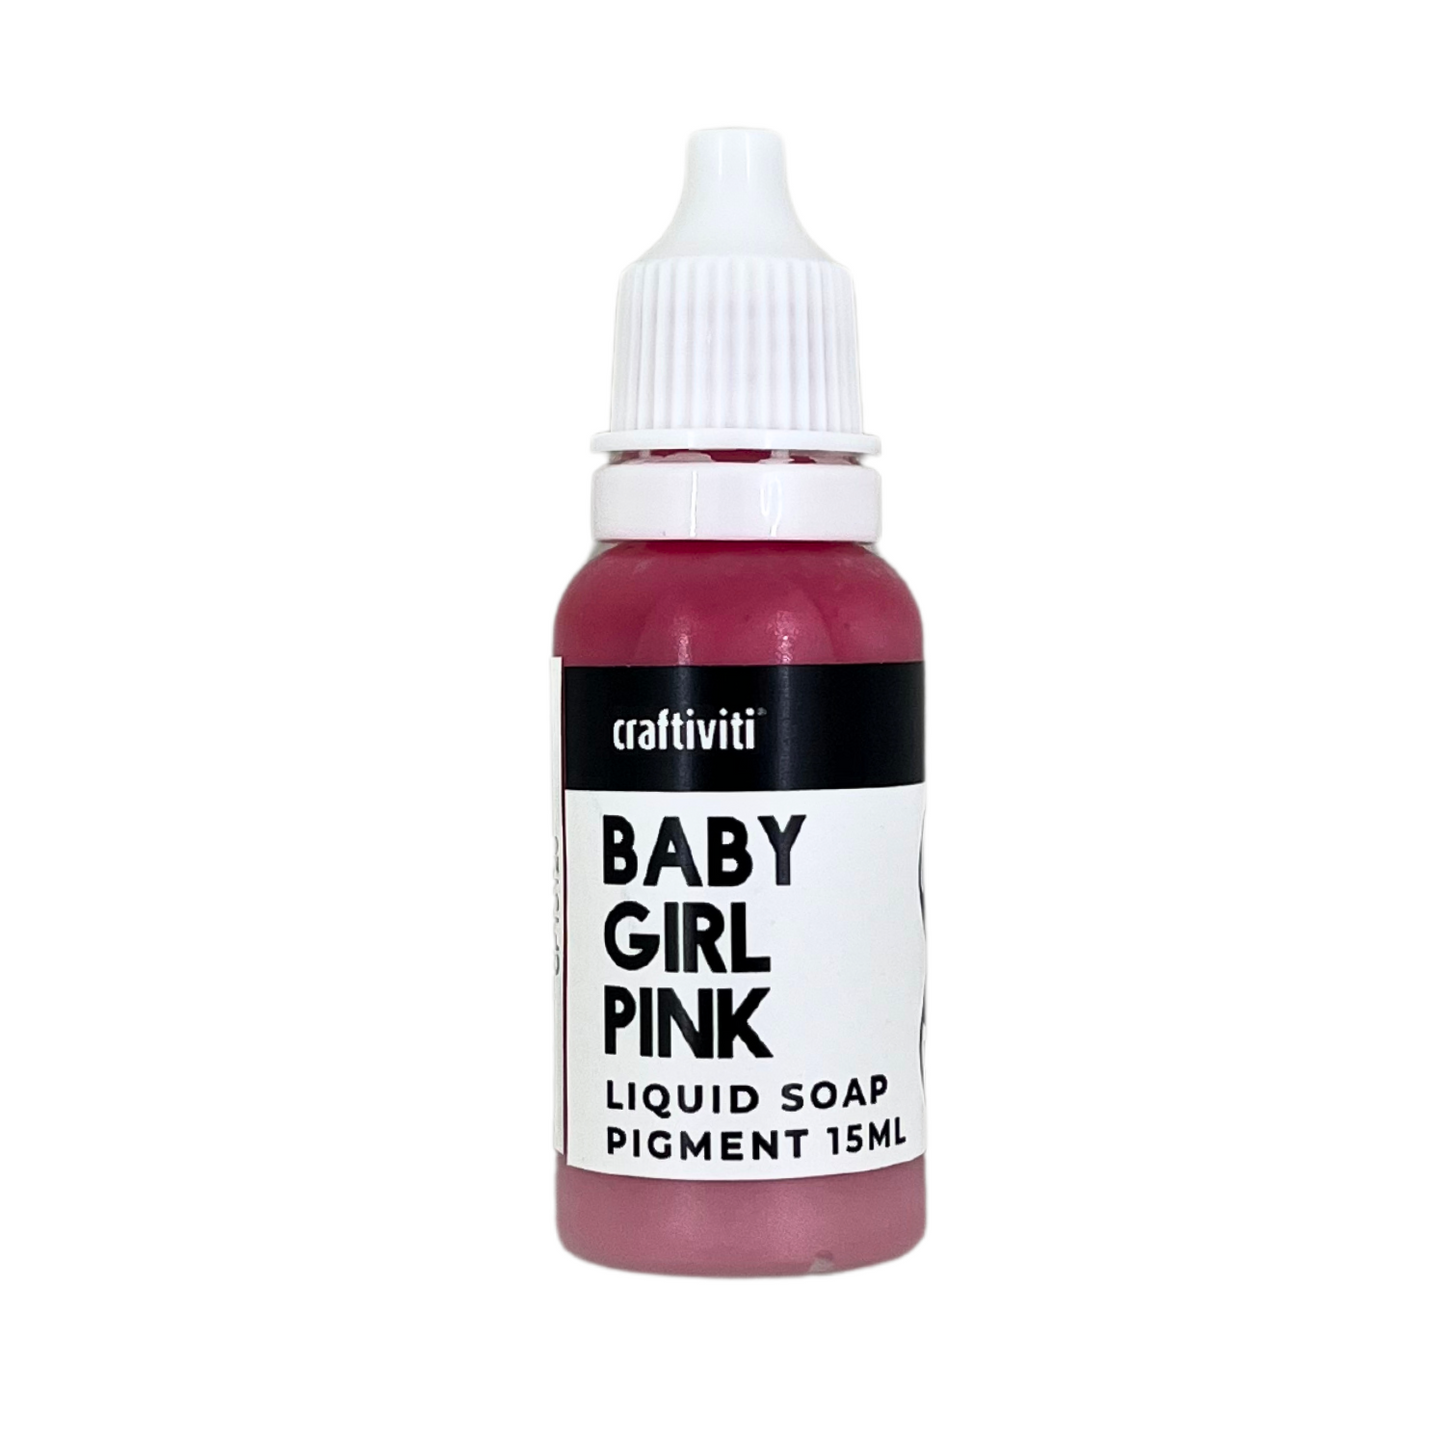 Liquid Soap Pigment 15ml - Baby Girl Pink